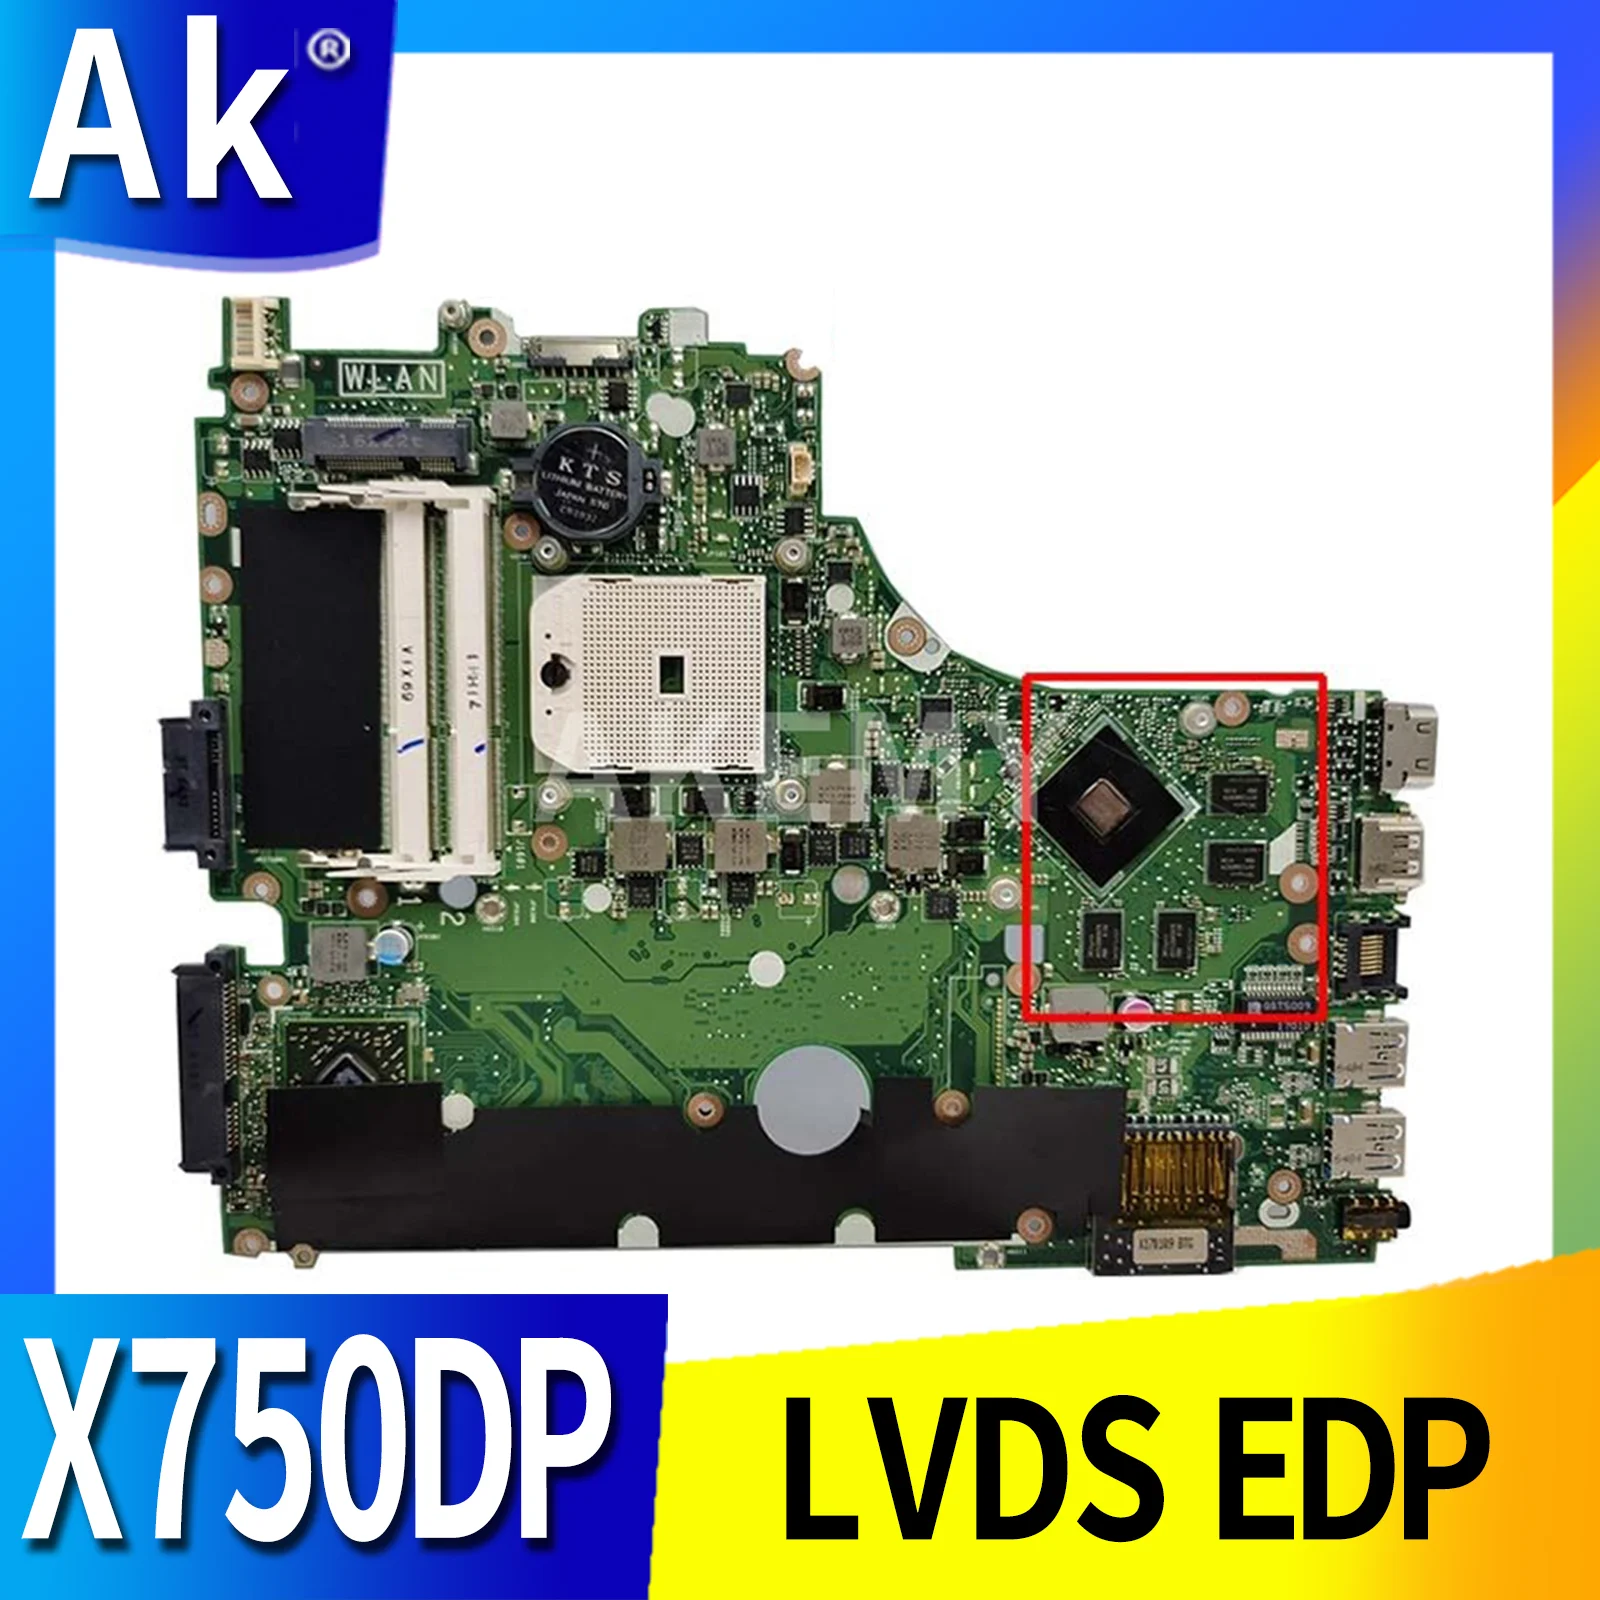 

X750DP Notebook mainboard LVDS EDP For Asus X550 K550D X550D K550DP X750D Laptop Motherboard